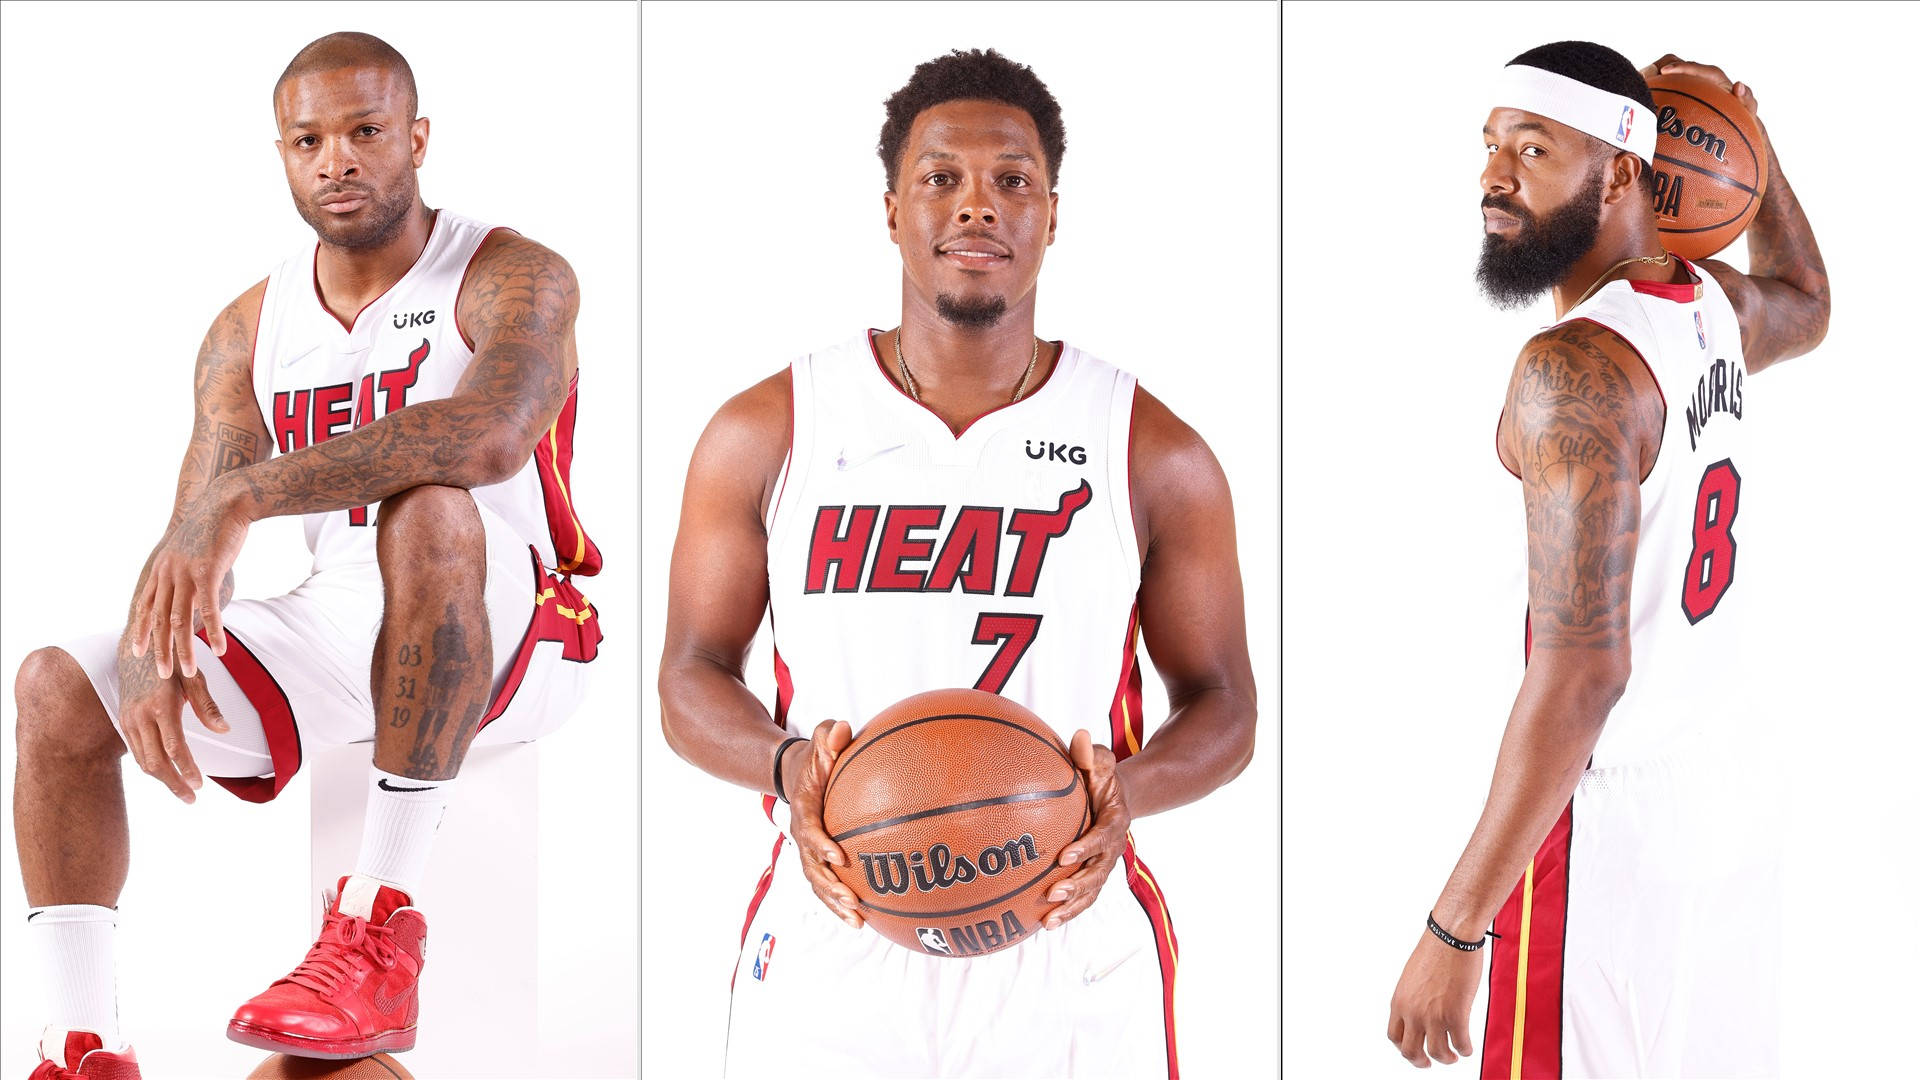 Miami Heat Players